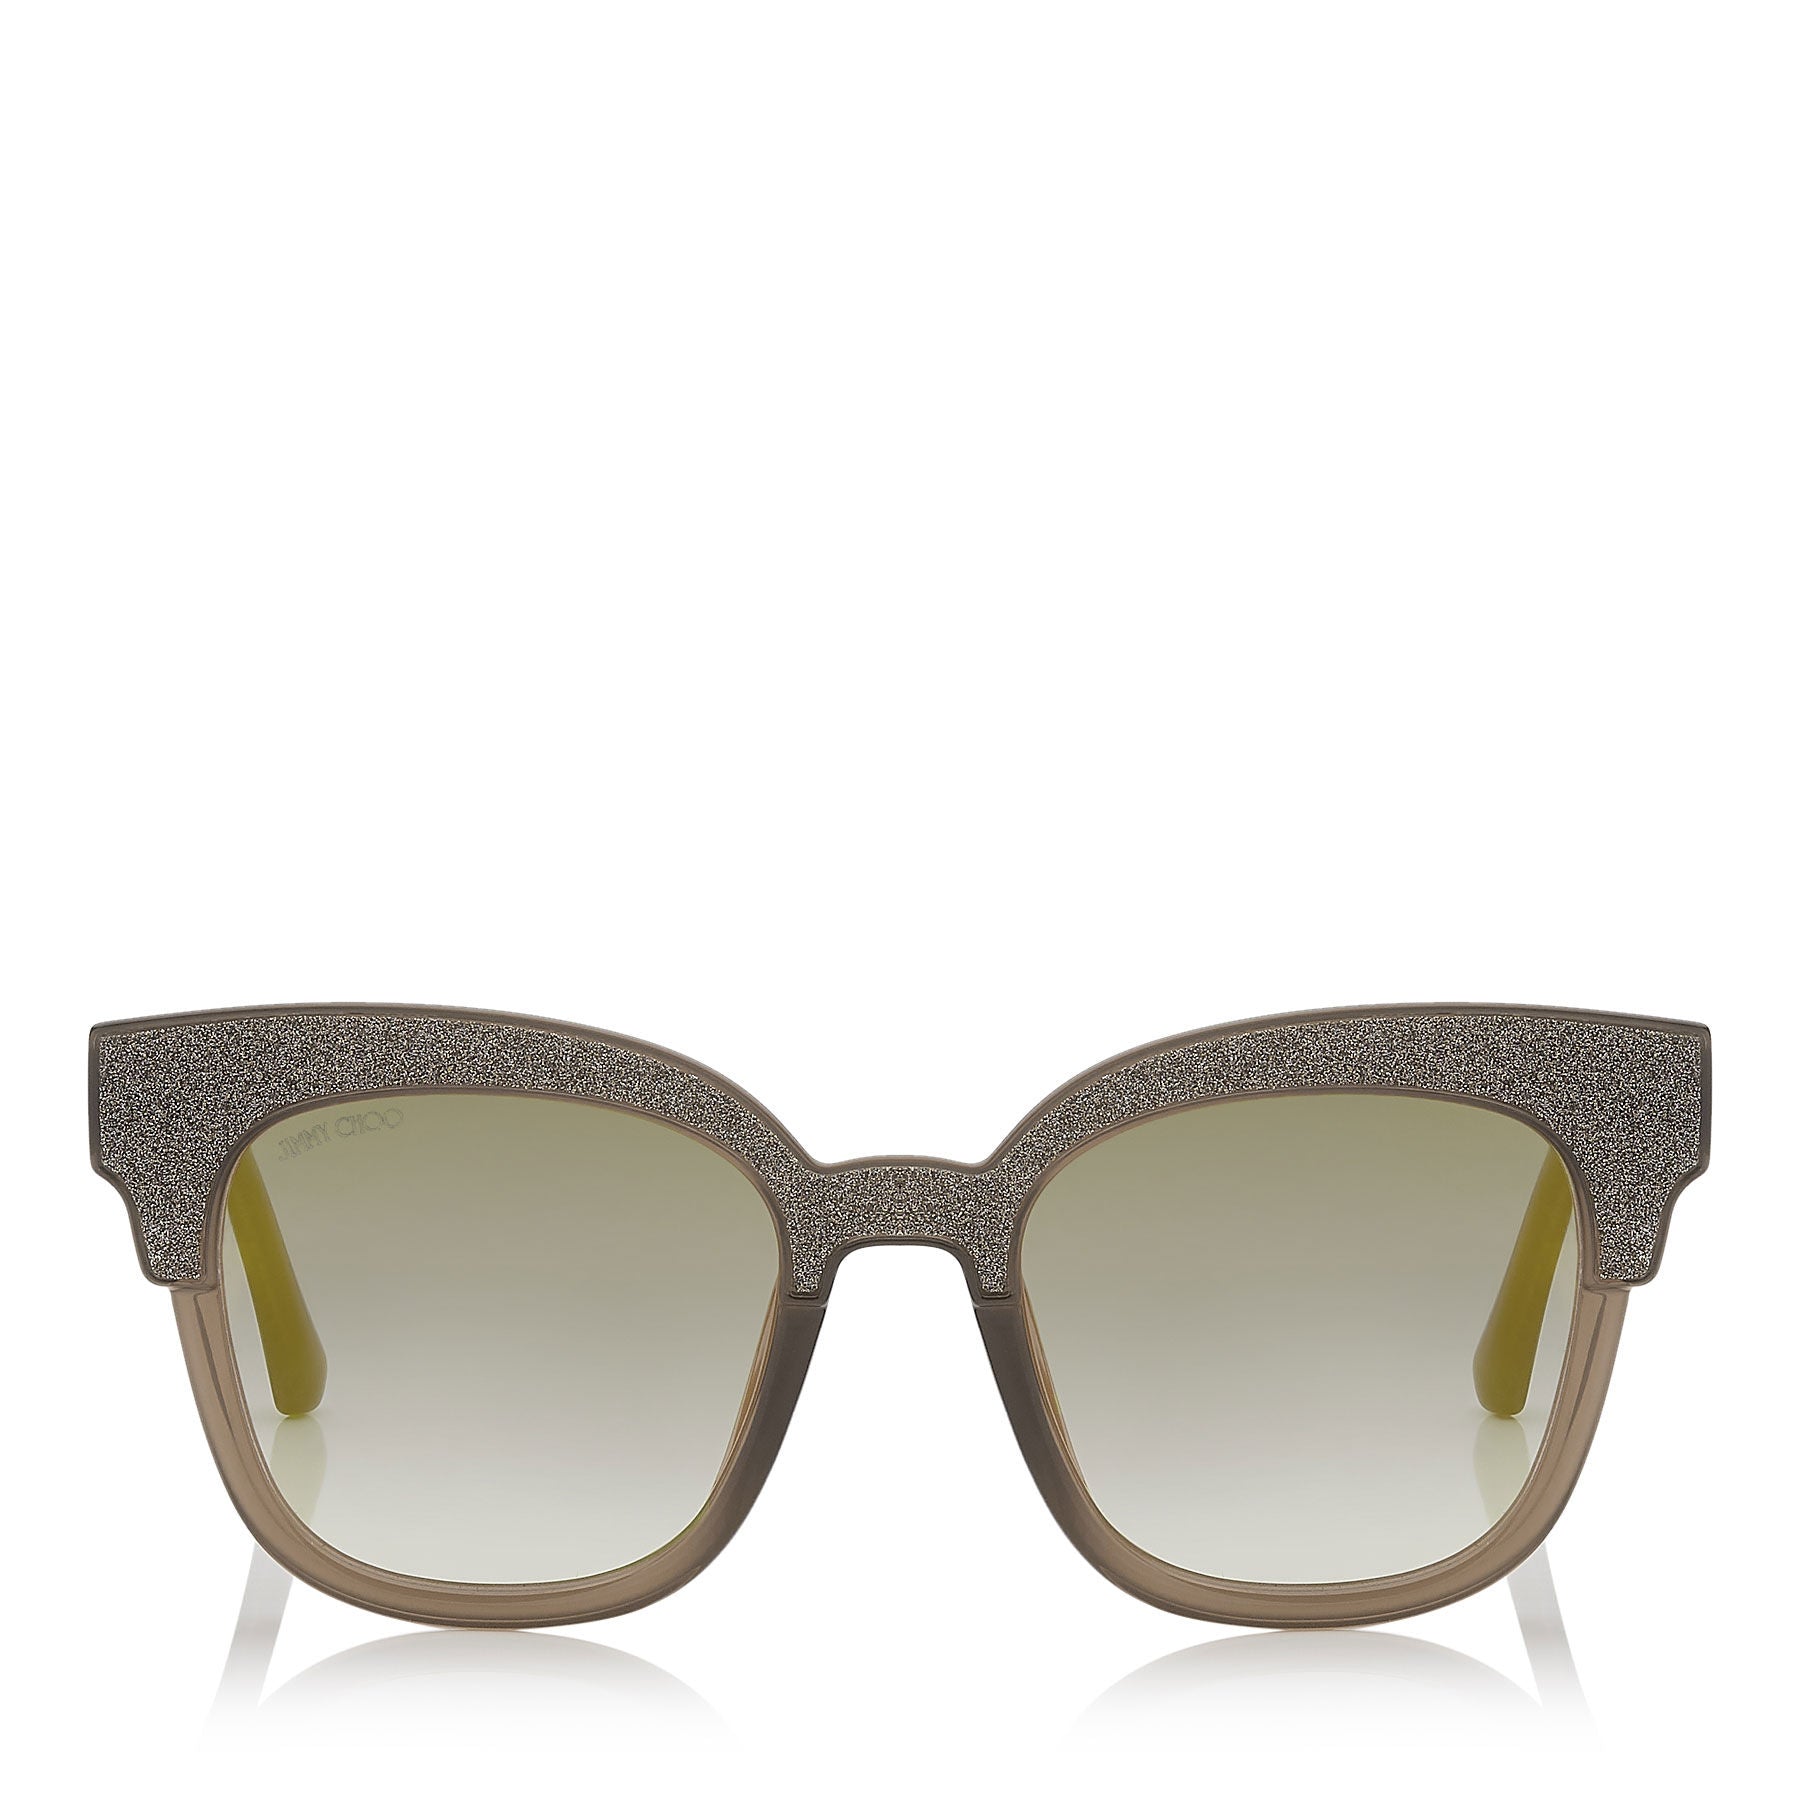 JIMMY CHOO  Mayela Mud Cat-Eye Sunglasses with Mud Crystal Fabric ITEM NO. MAYELAS50E19A